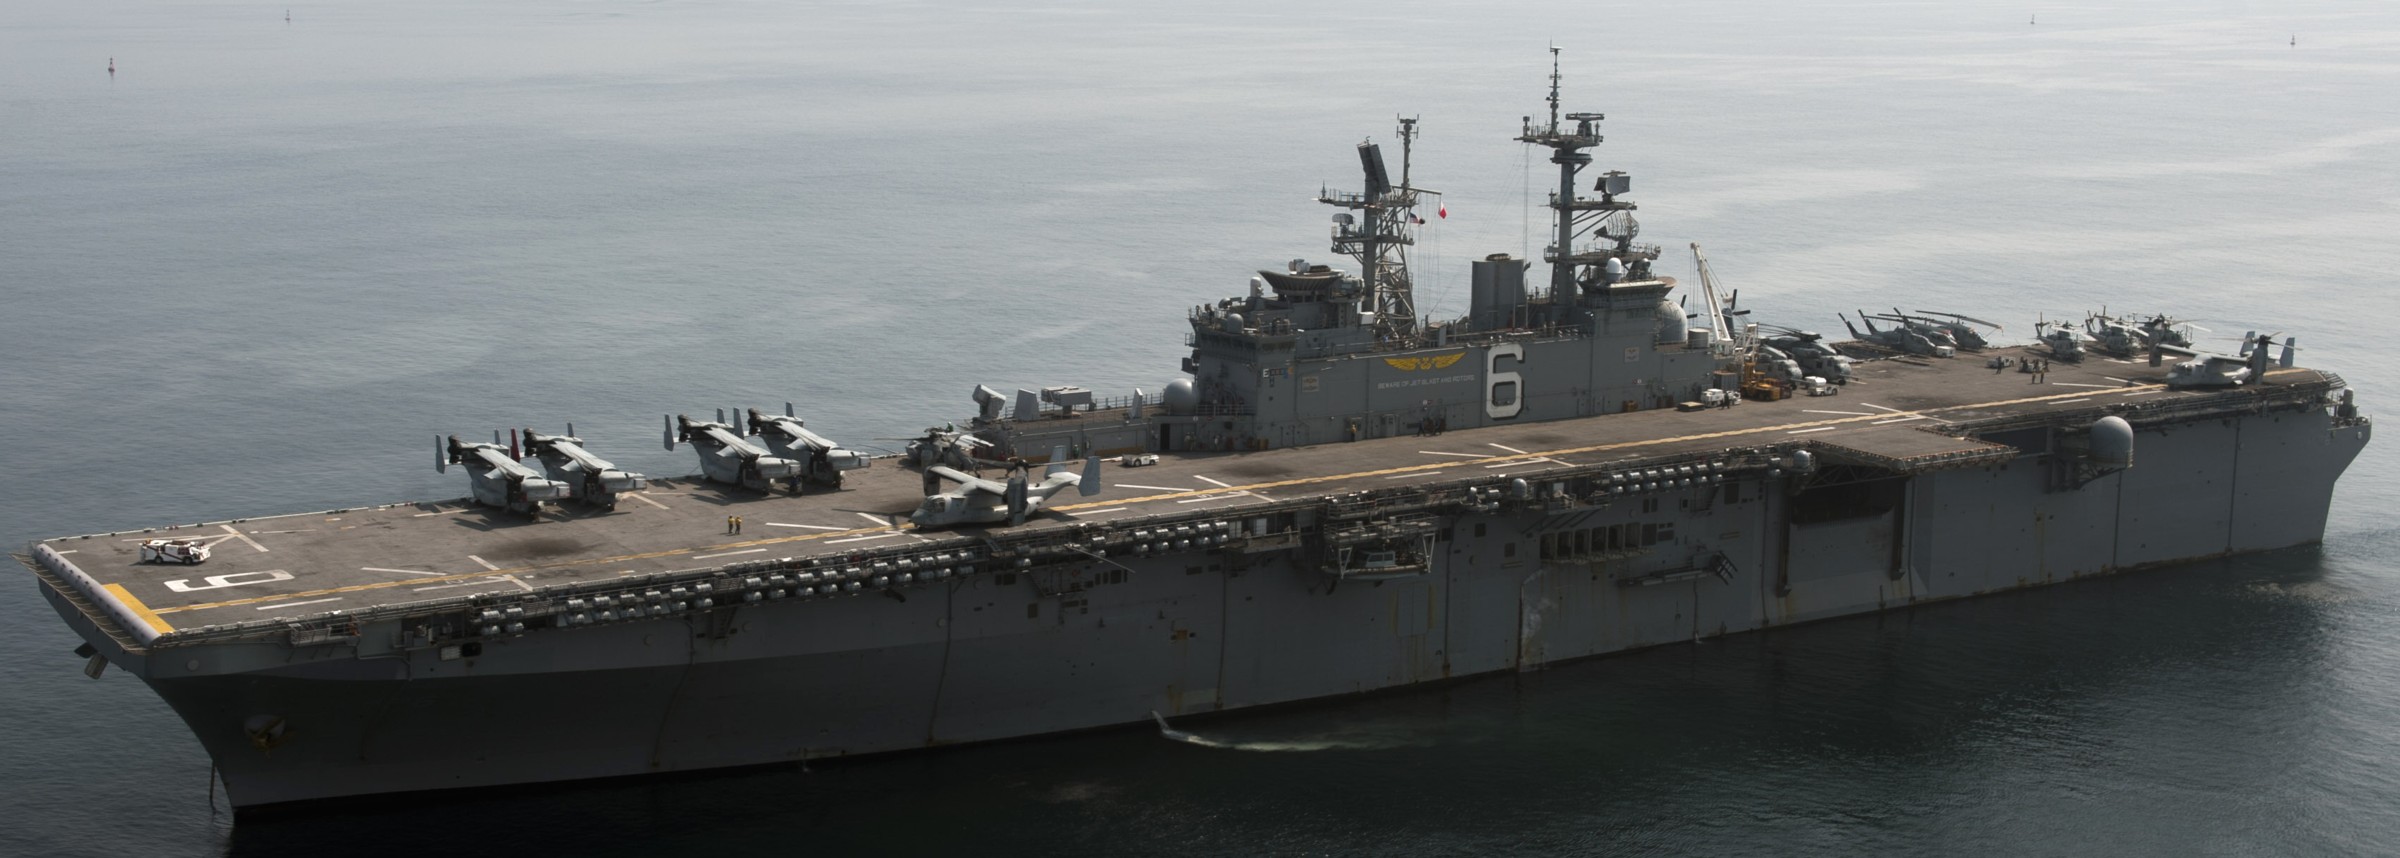 lhd-6 uss bonhomme richard amphibious assault ship landing helicopter dock wasp class us navy east china sea 260